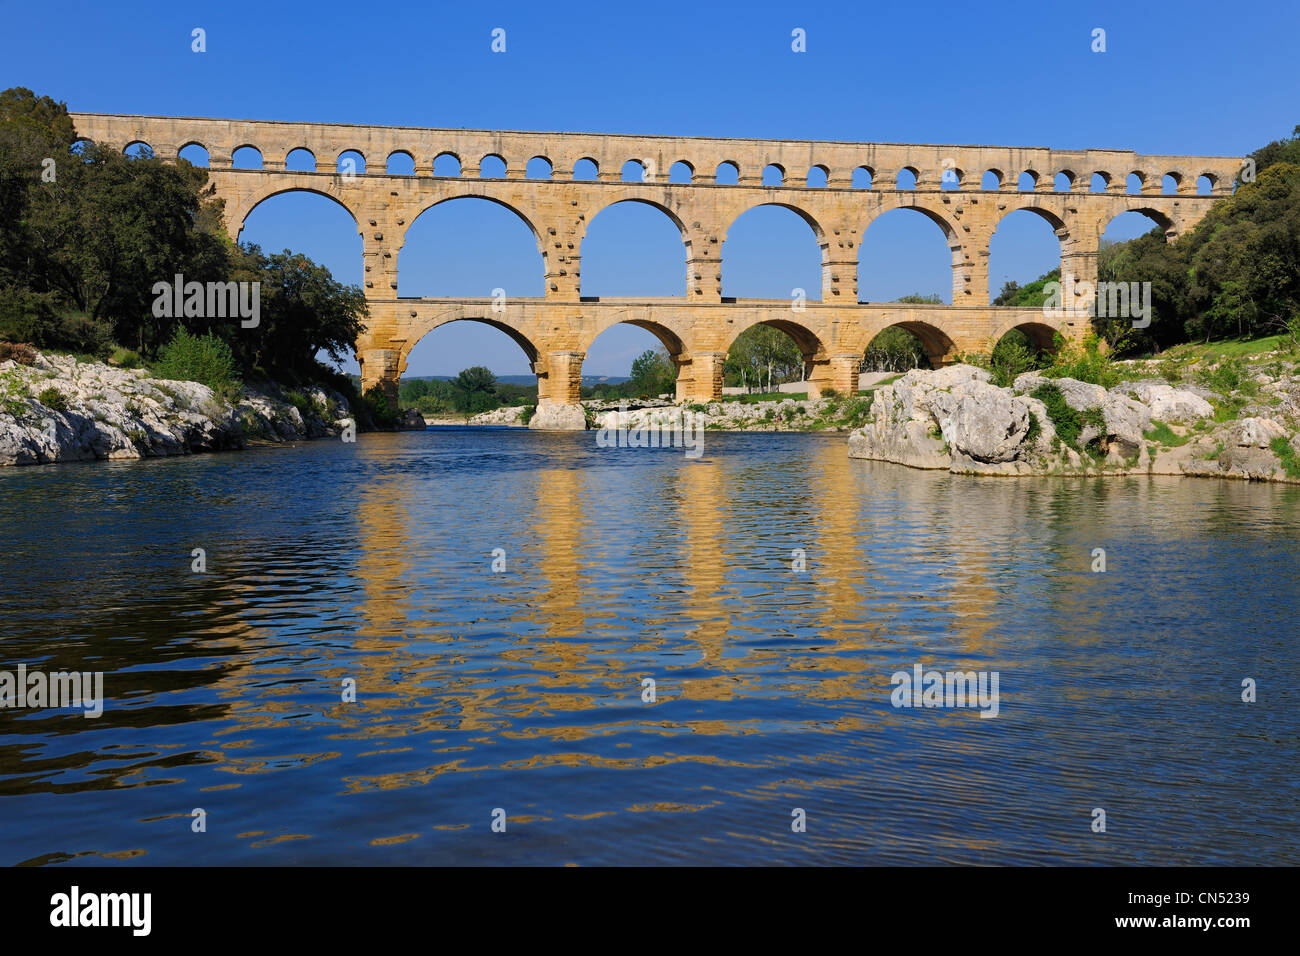 France, Gard, Pont du Gard listed as World Heritage by UNESCO, Roman aqueduct over Gardon River Stock Photo